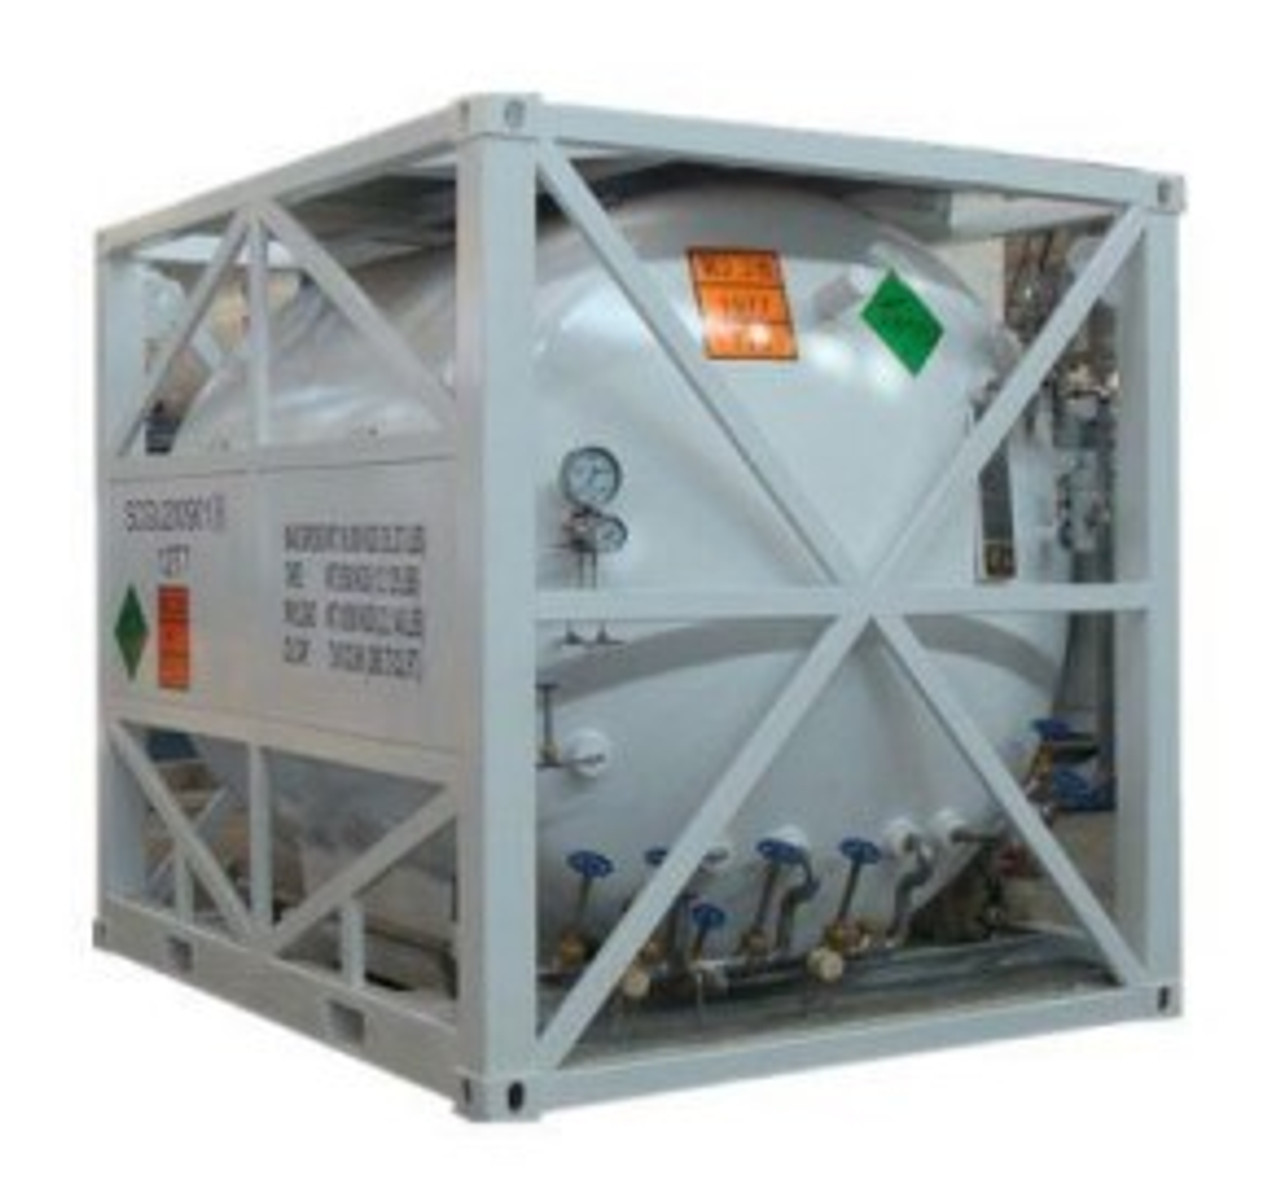 Cryogenic Offshore Tank for Liquid Nitrogen 8,000 Liters